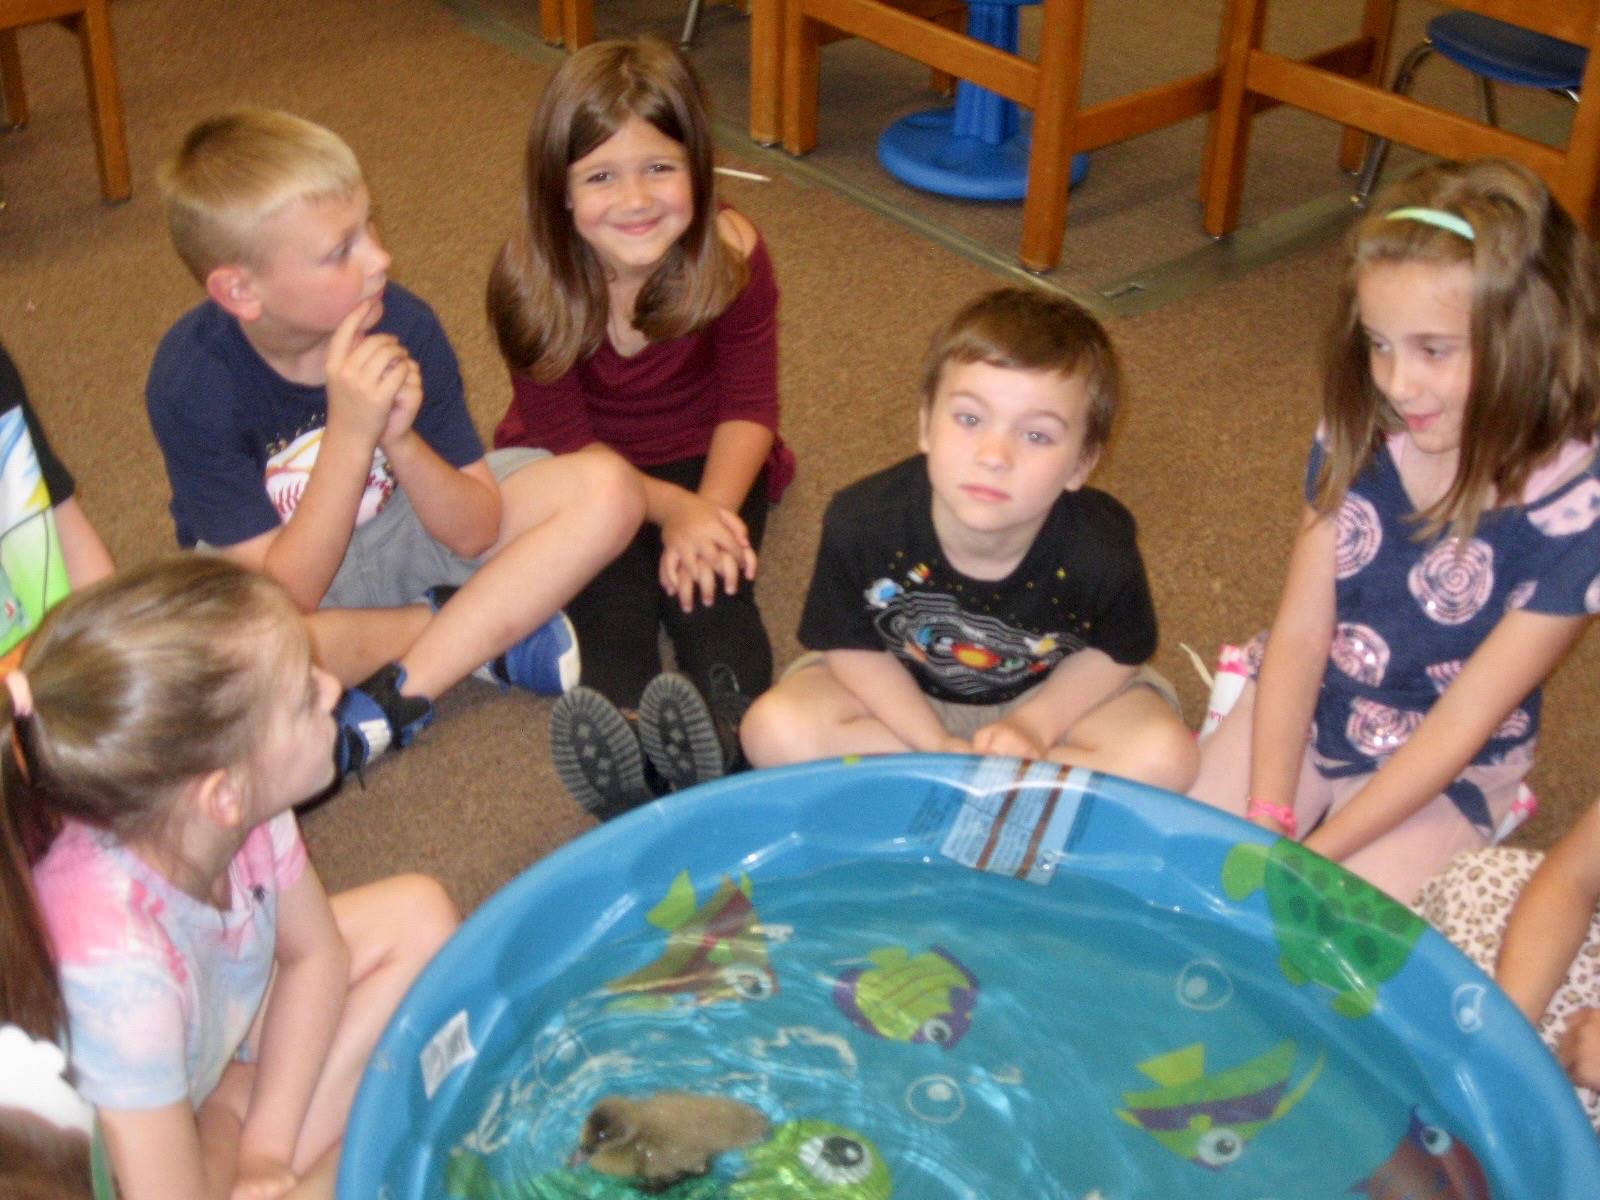 5 students watch ducks swim in a pool.